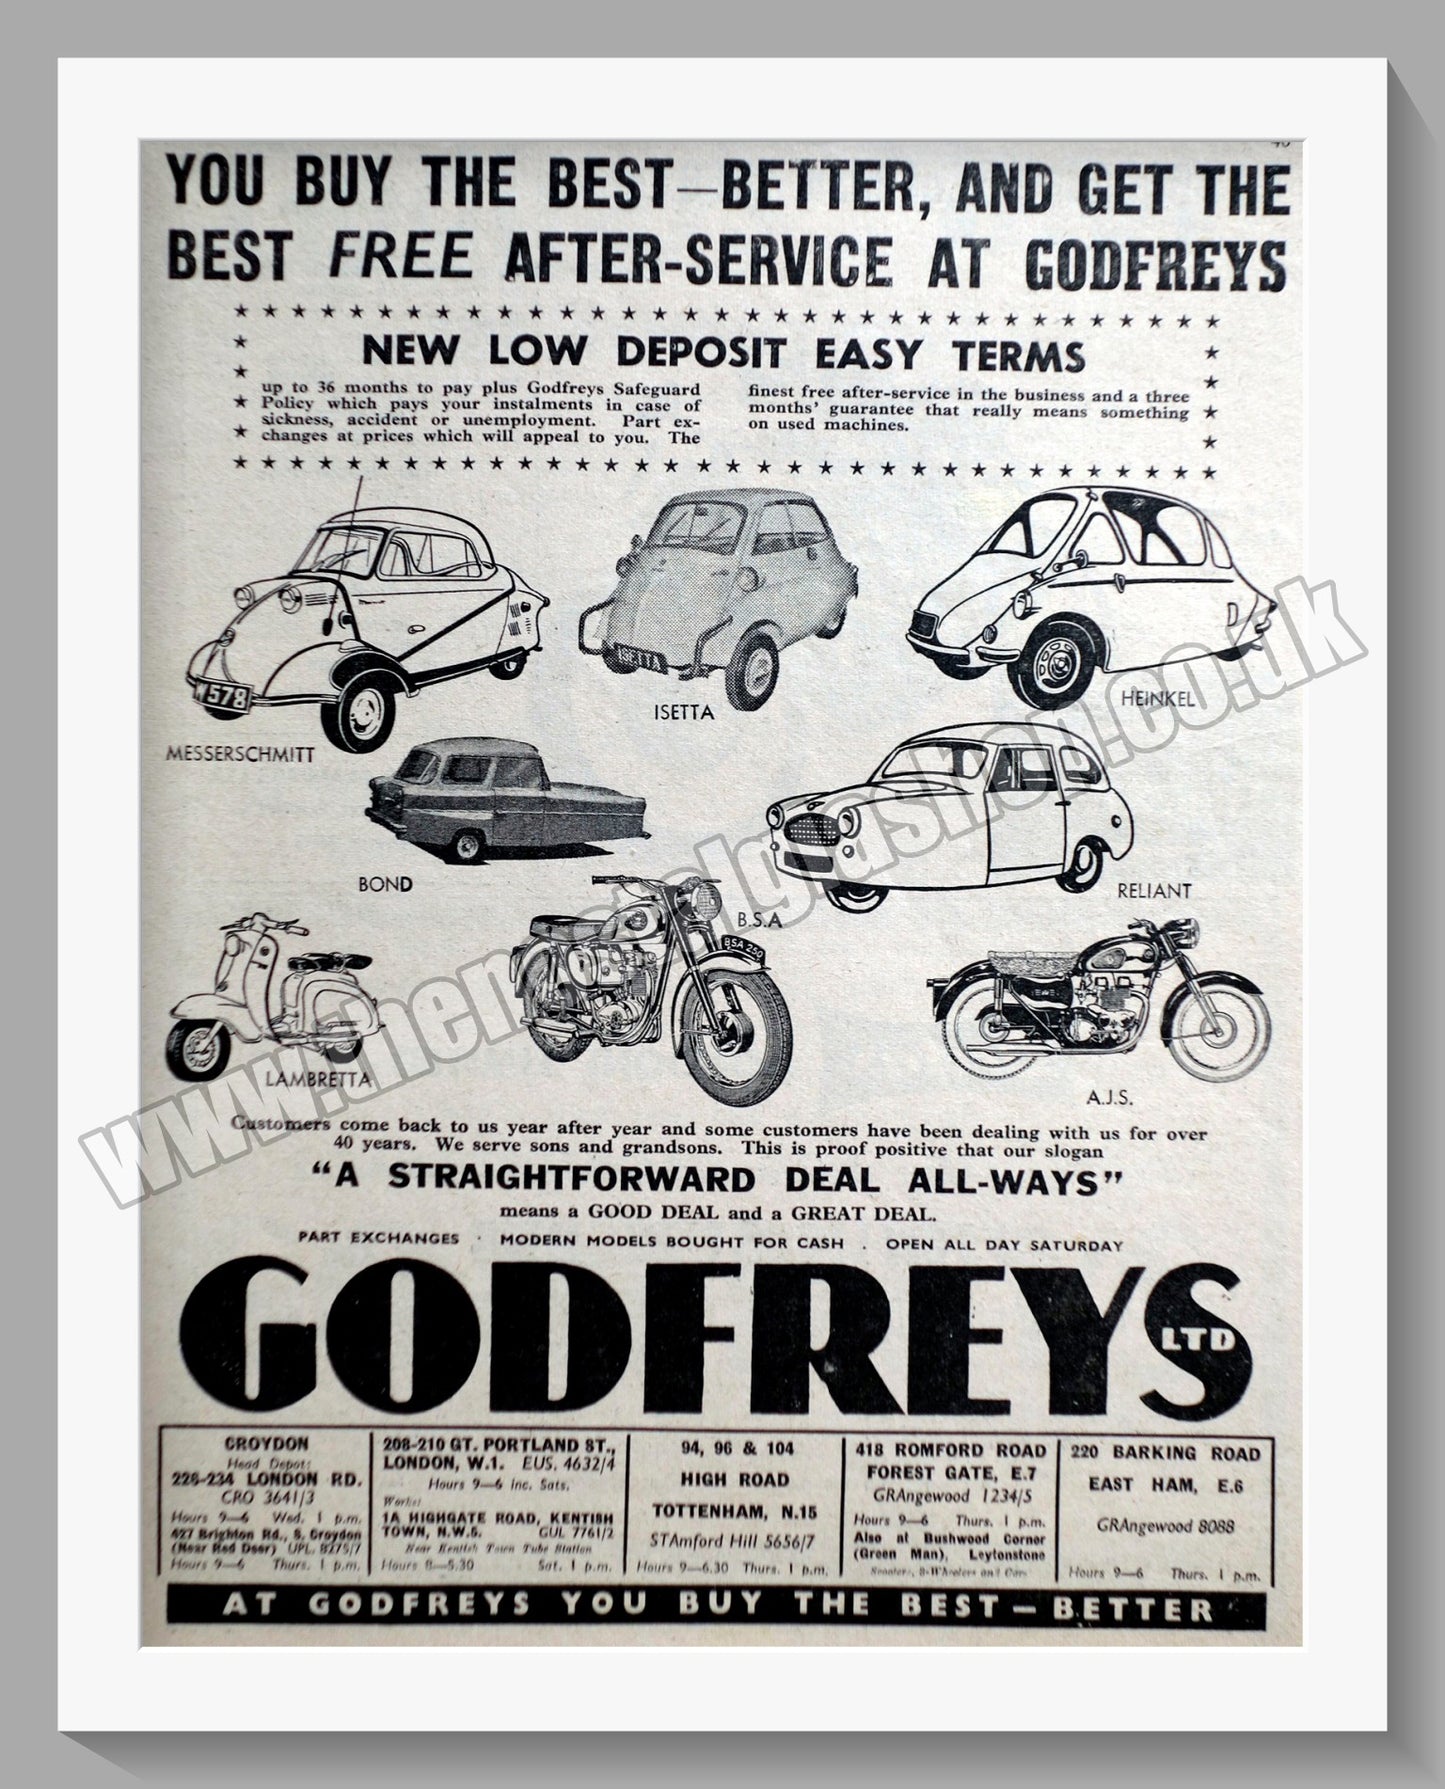 Godfreys Ltd Motorcycle Dealers. Original Advert 1959 (ref AD57338)